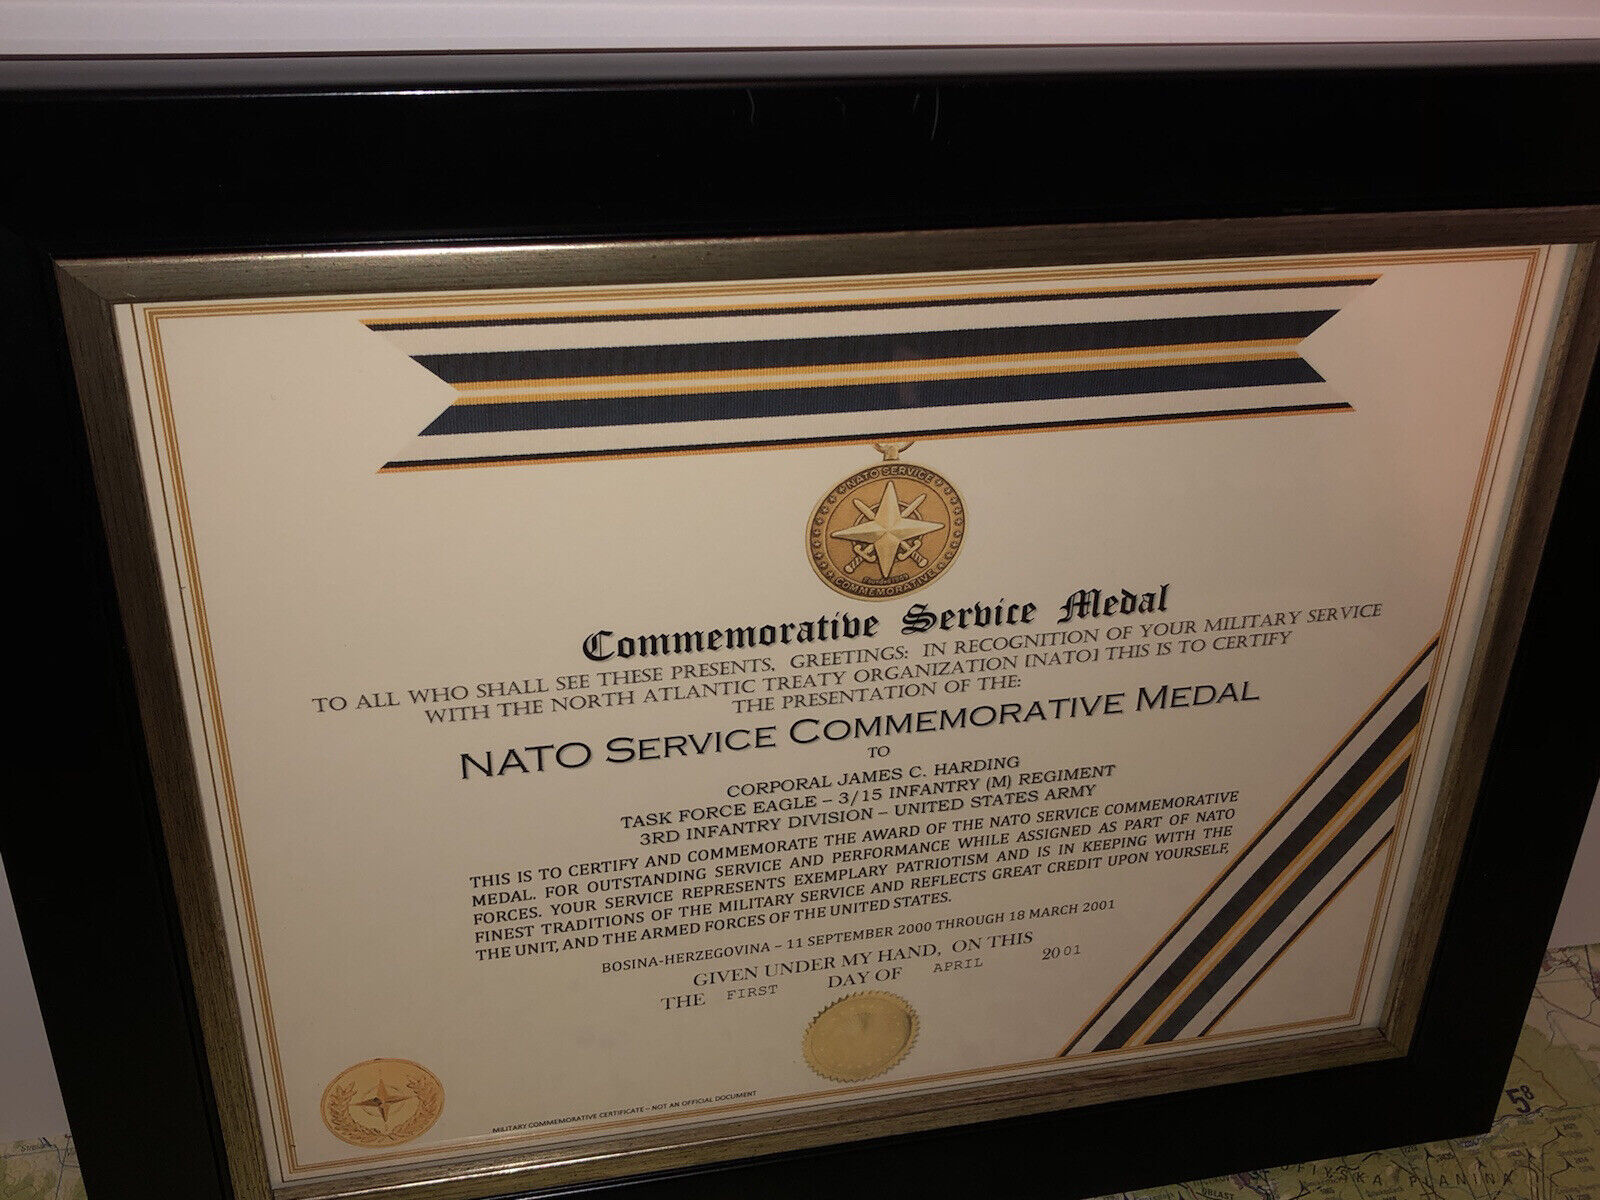 NATO SERVICE COMMEMORATIVE MEDAL CERTIFICATE ~ Type 1